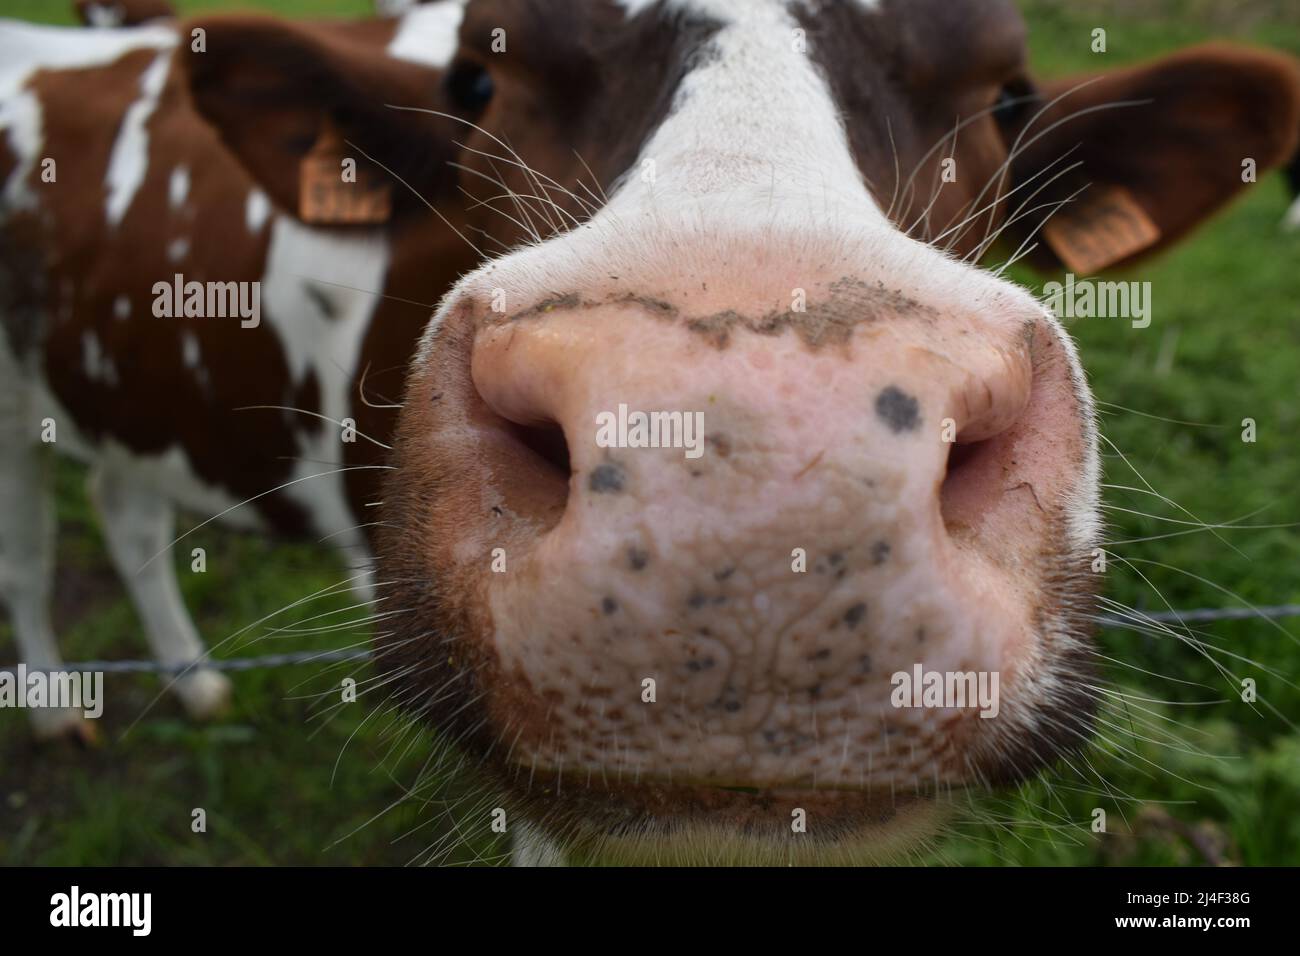 Kuh, Cattle, Cow, Rind, Schnauze, Snout, Kuhschnautze, Nase, Nasen-OP, Nüstern, Ohren, Kuhkopf, Nutztier, Nase, Neugier, neugierig, Farm, Bauernhof Stock Photo